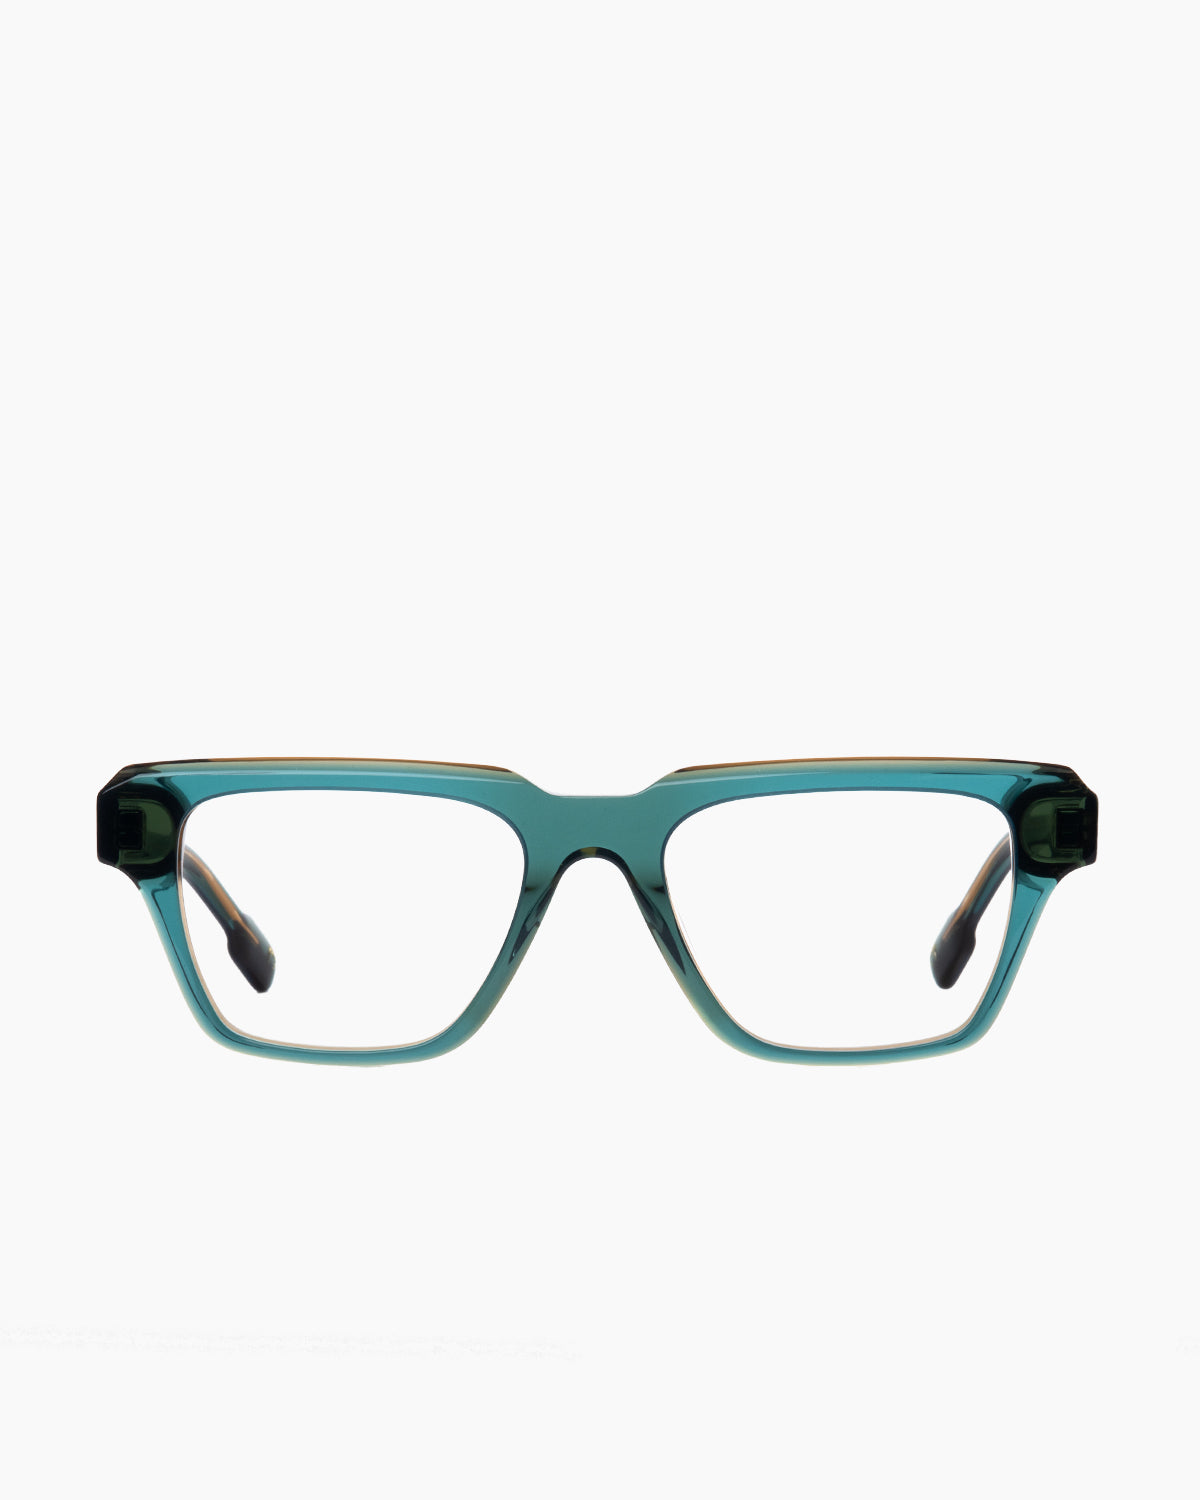 Spectacleeyeworks - Brad - c736 | Bar à lunettes